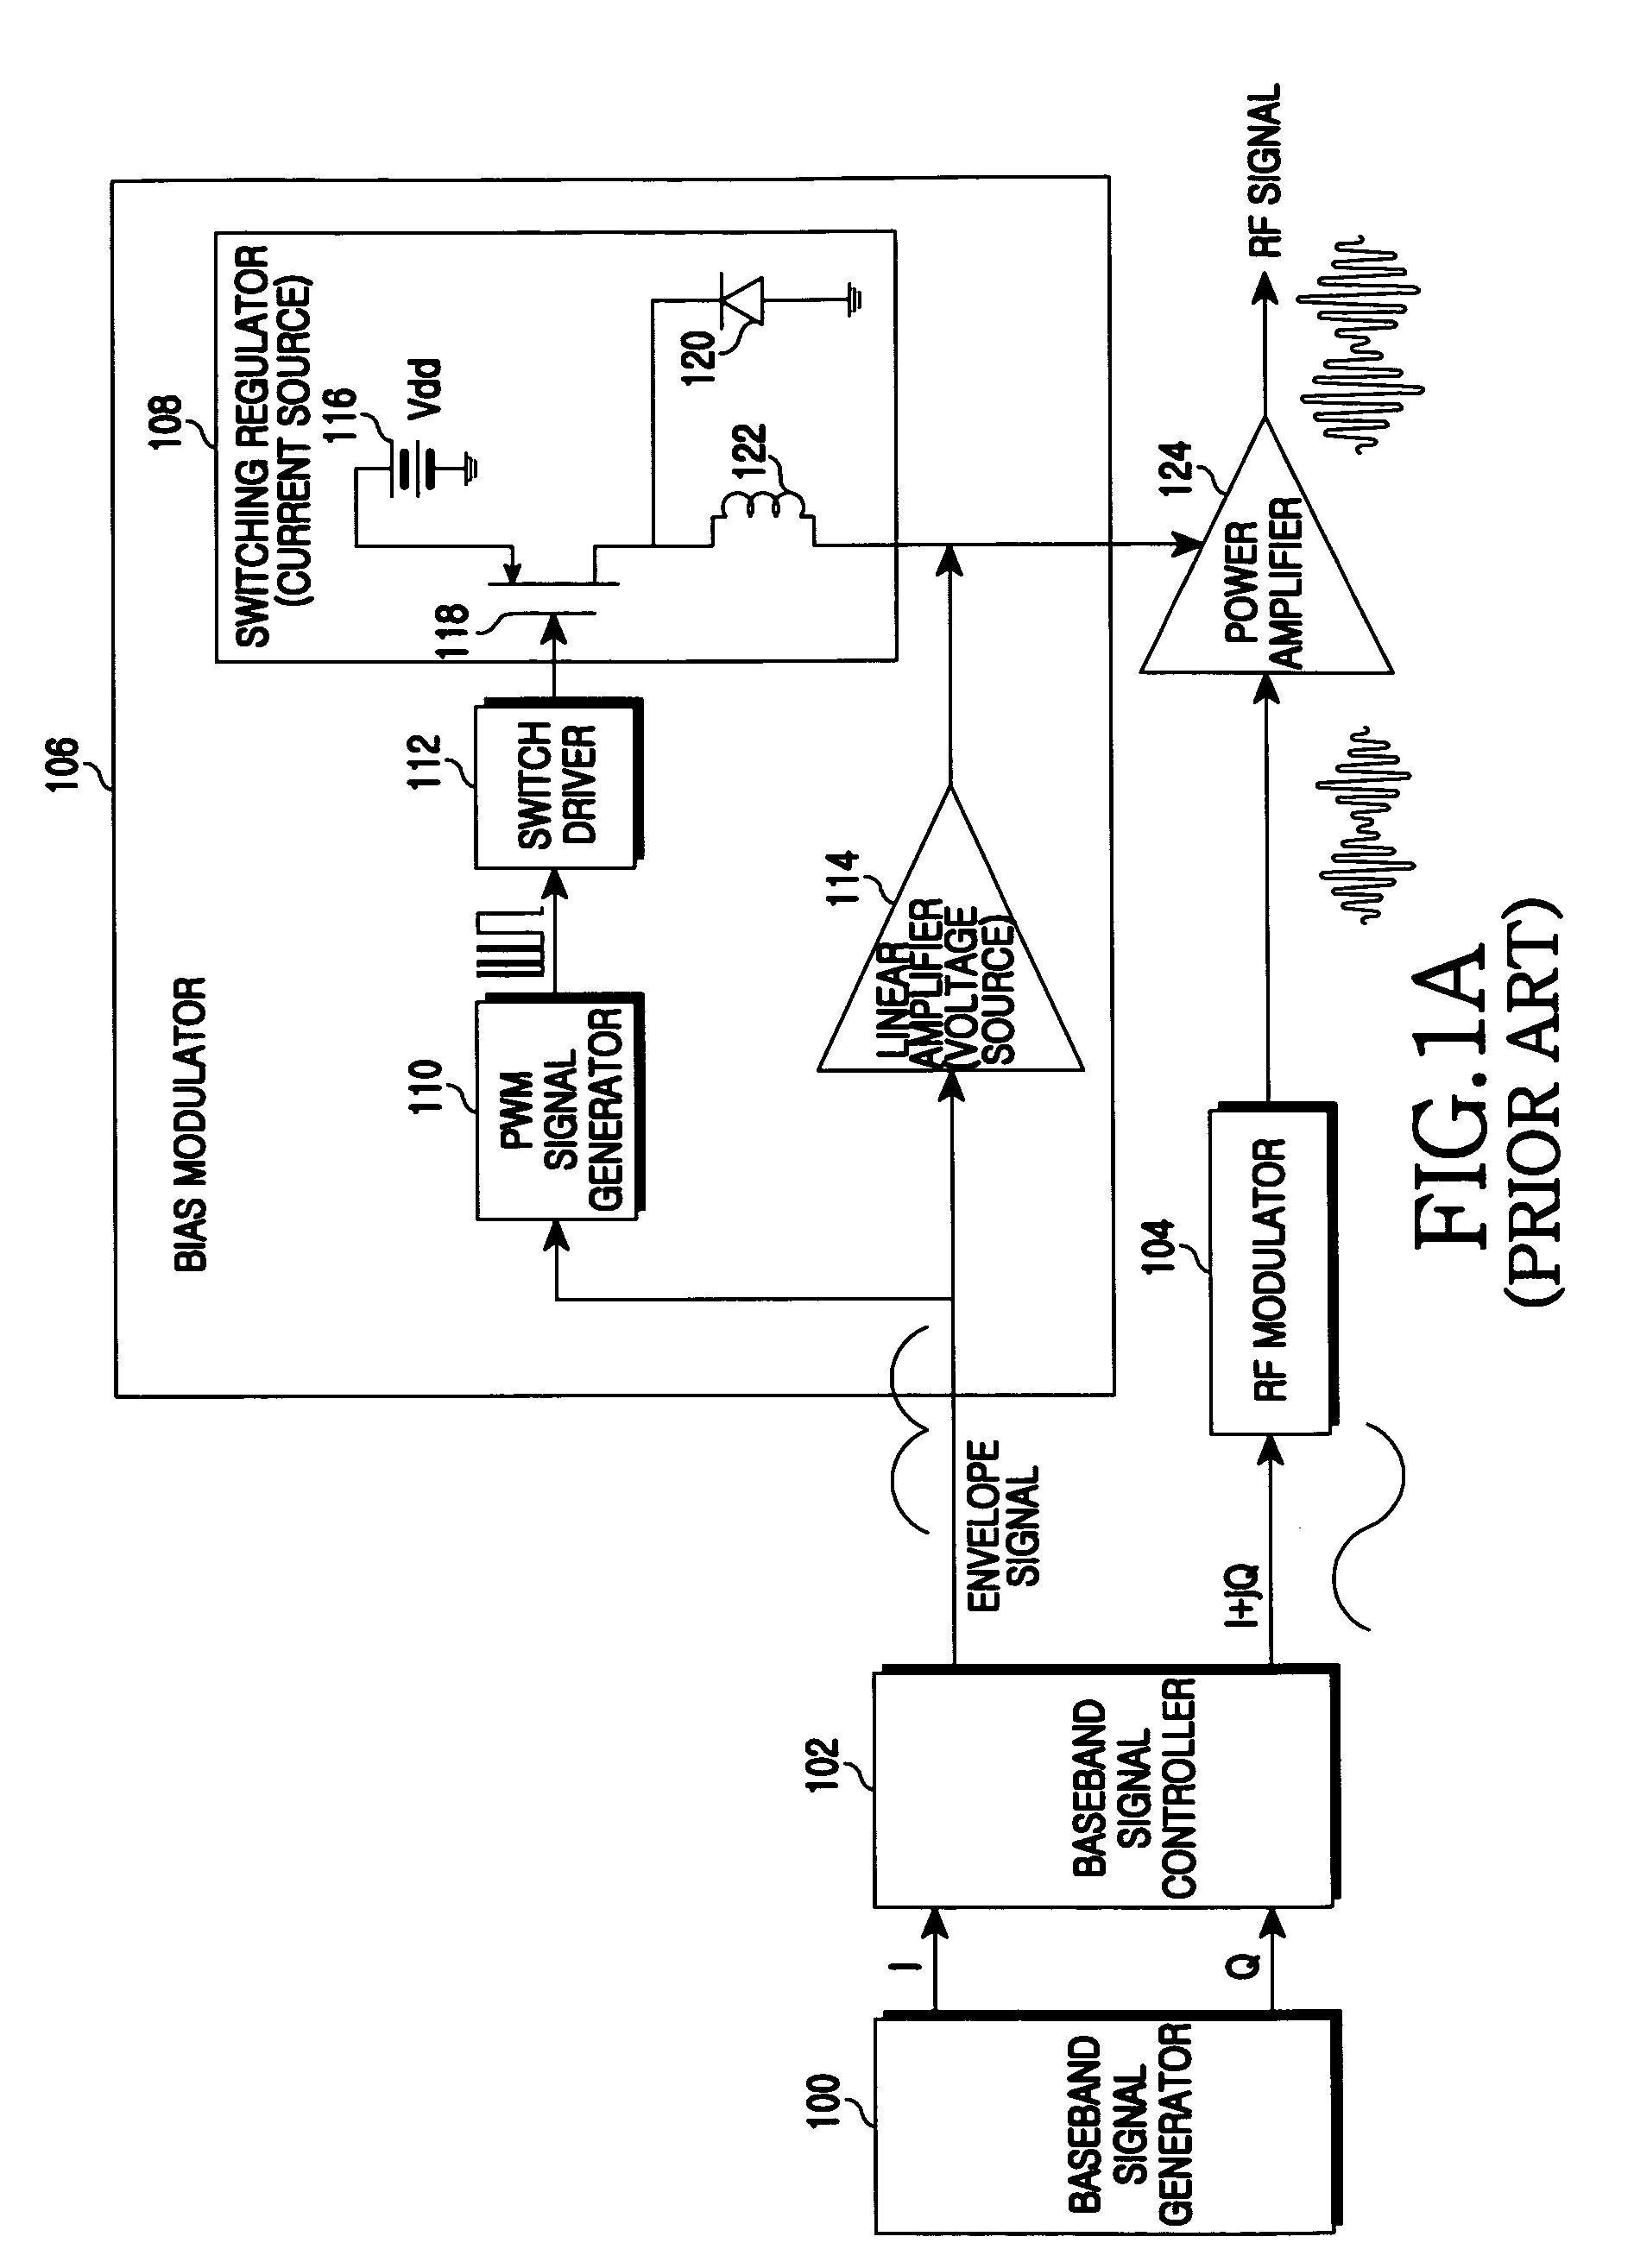 Apparatus and method for bias modulator using zero current switching